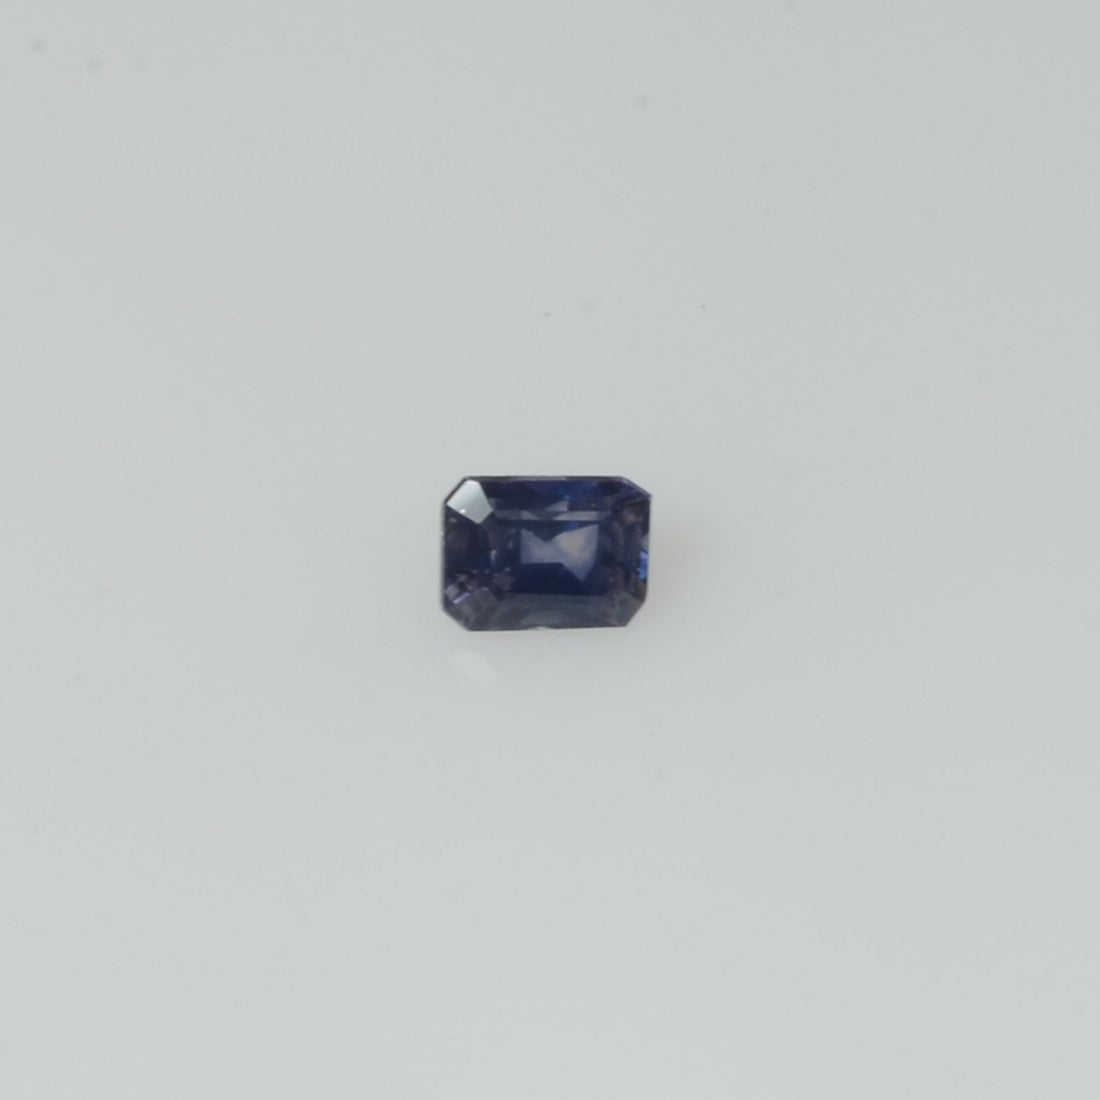 0.23 cts Natural Purple Sapphire Loose Gemstone Emerald Cut